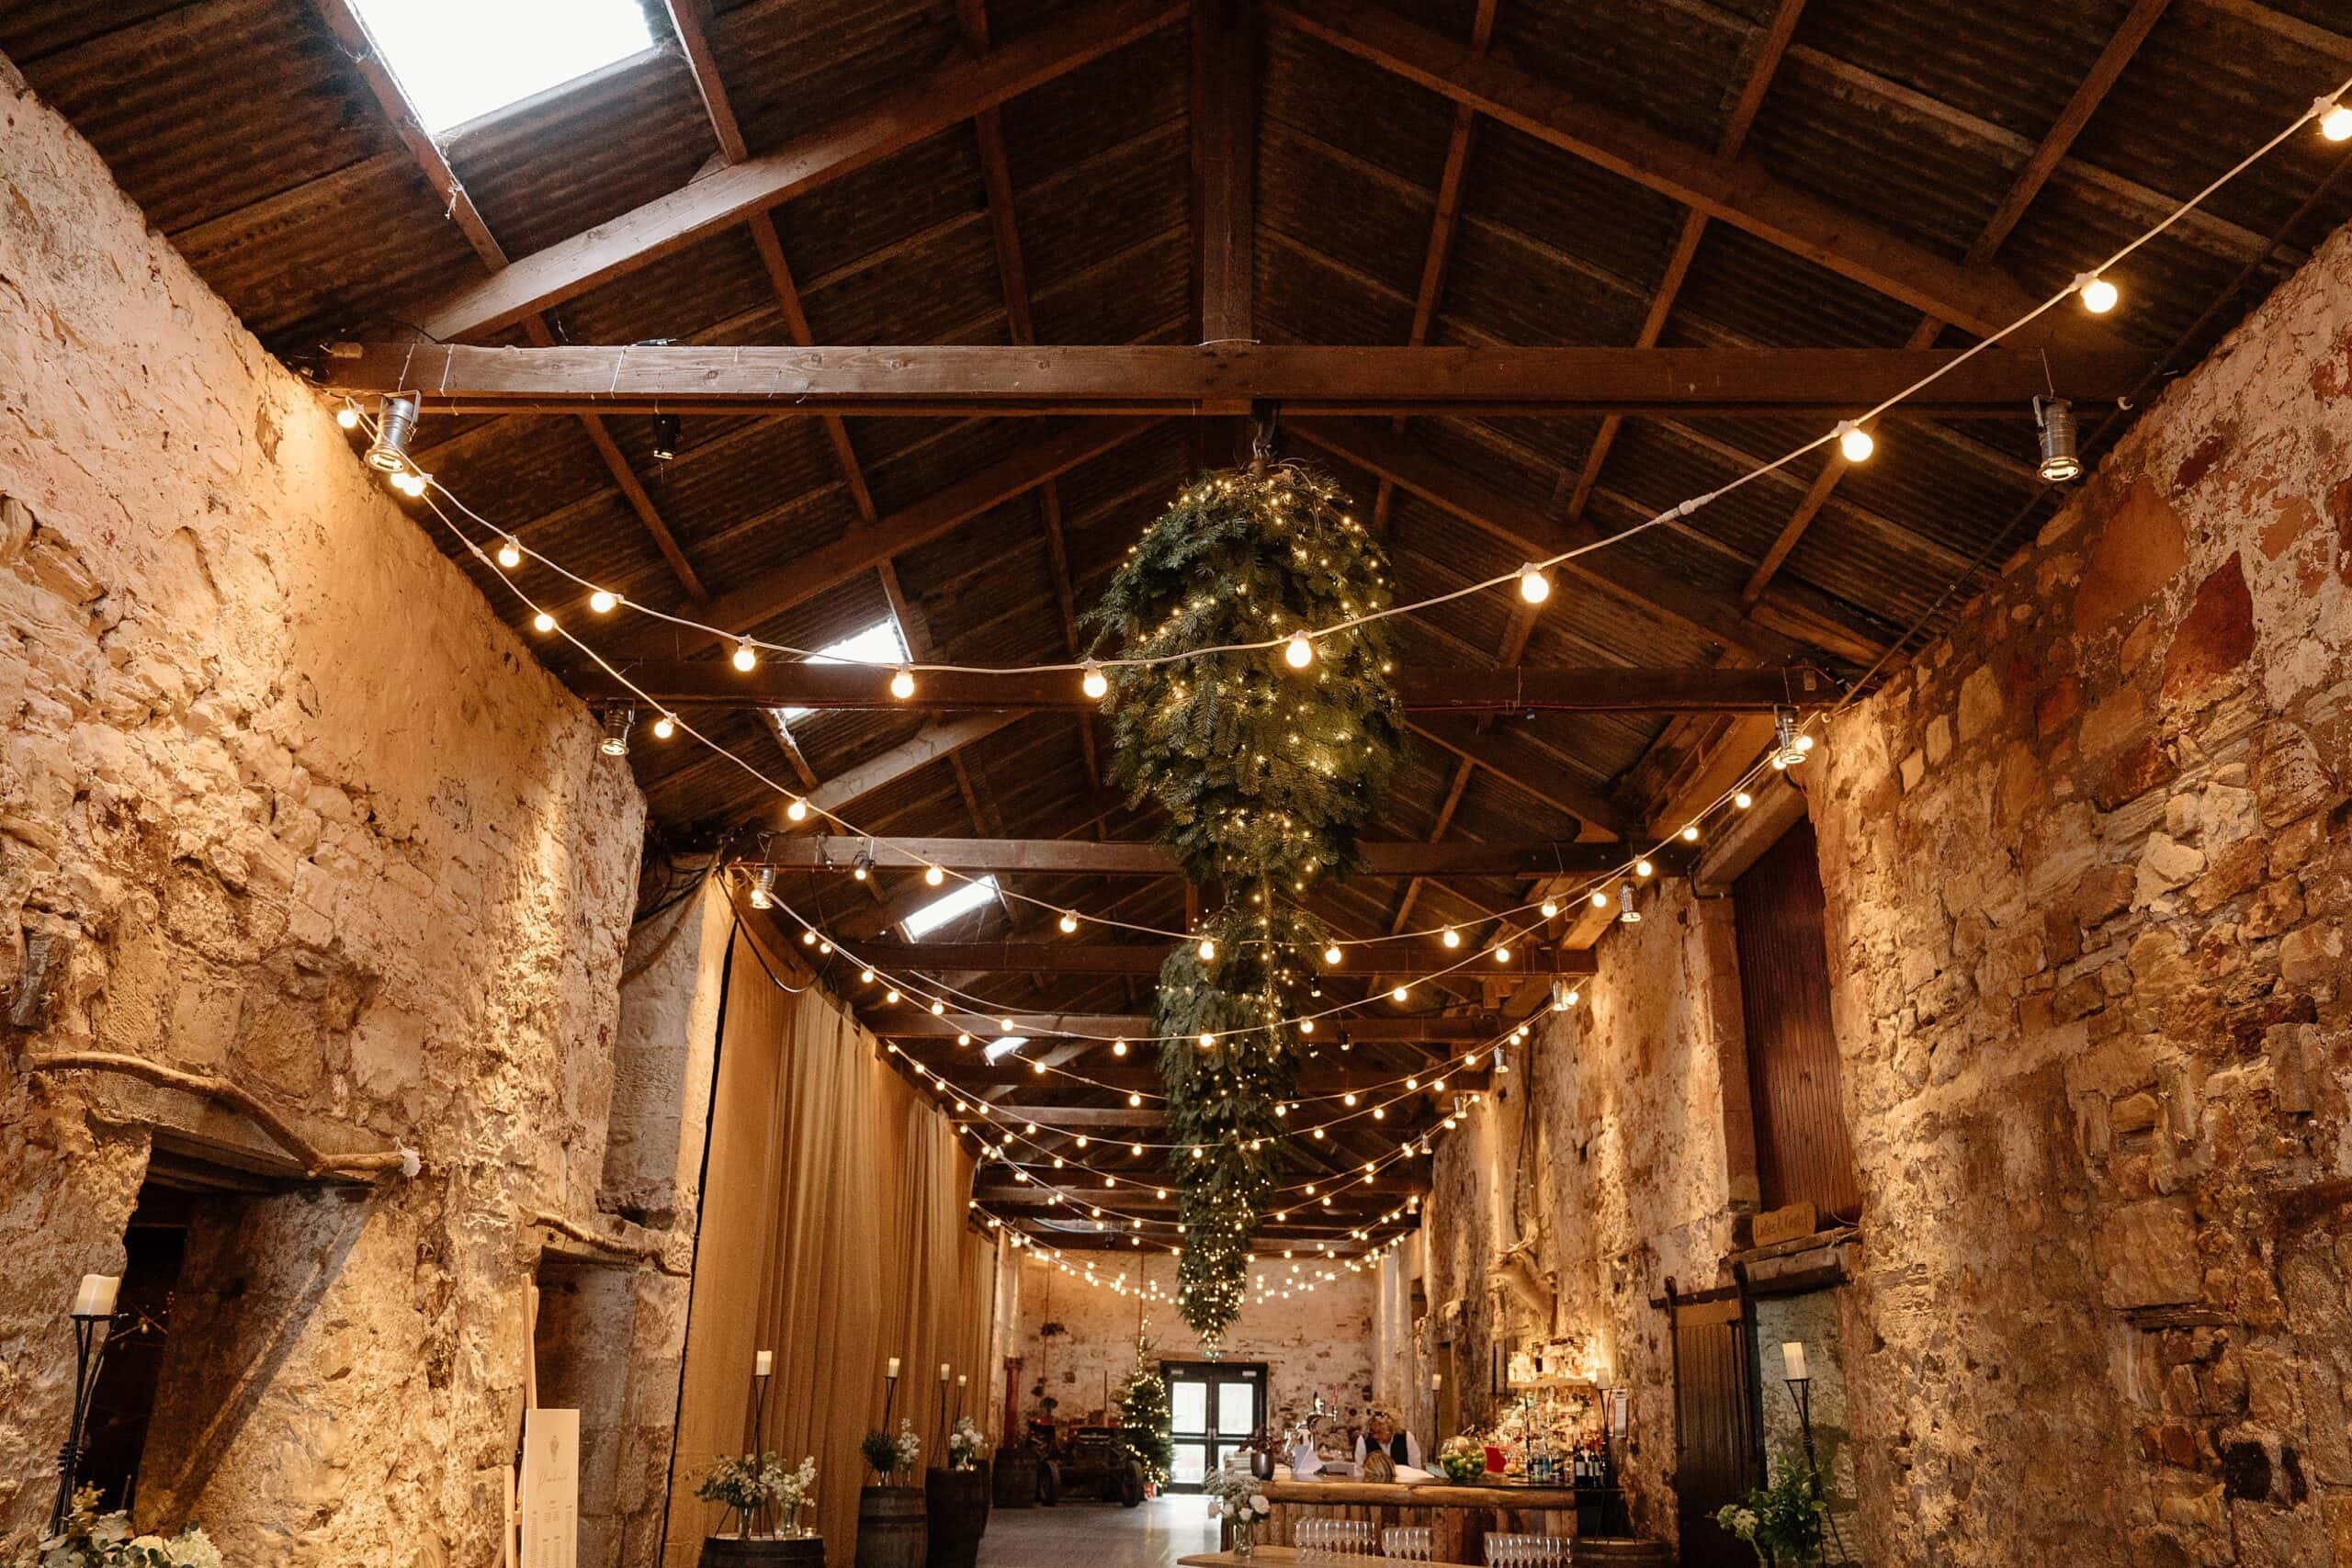 kinkell byre wedding photos interior inside view of farm barn wedding venue st andrews scotland with fairy lights